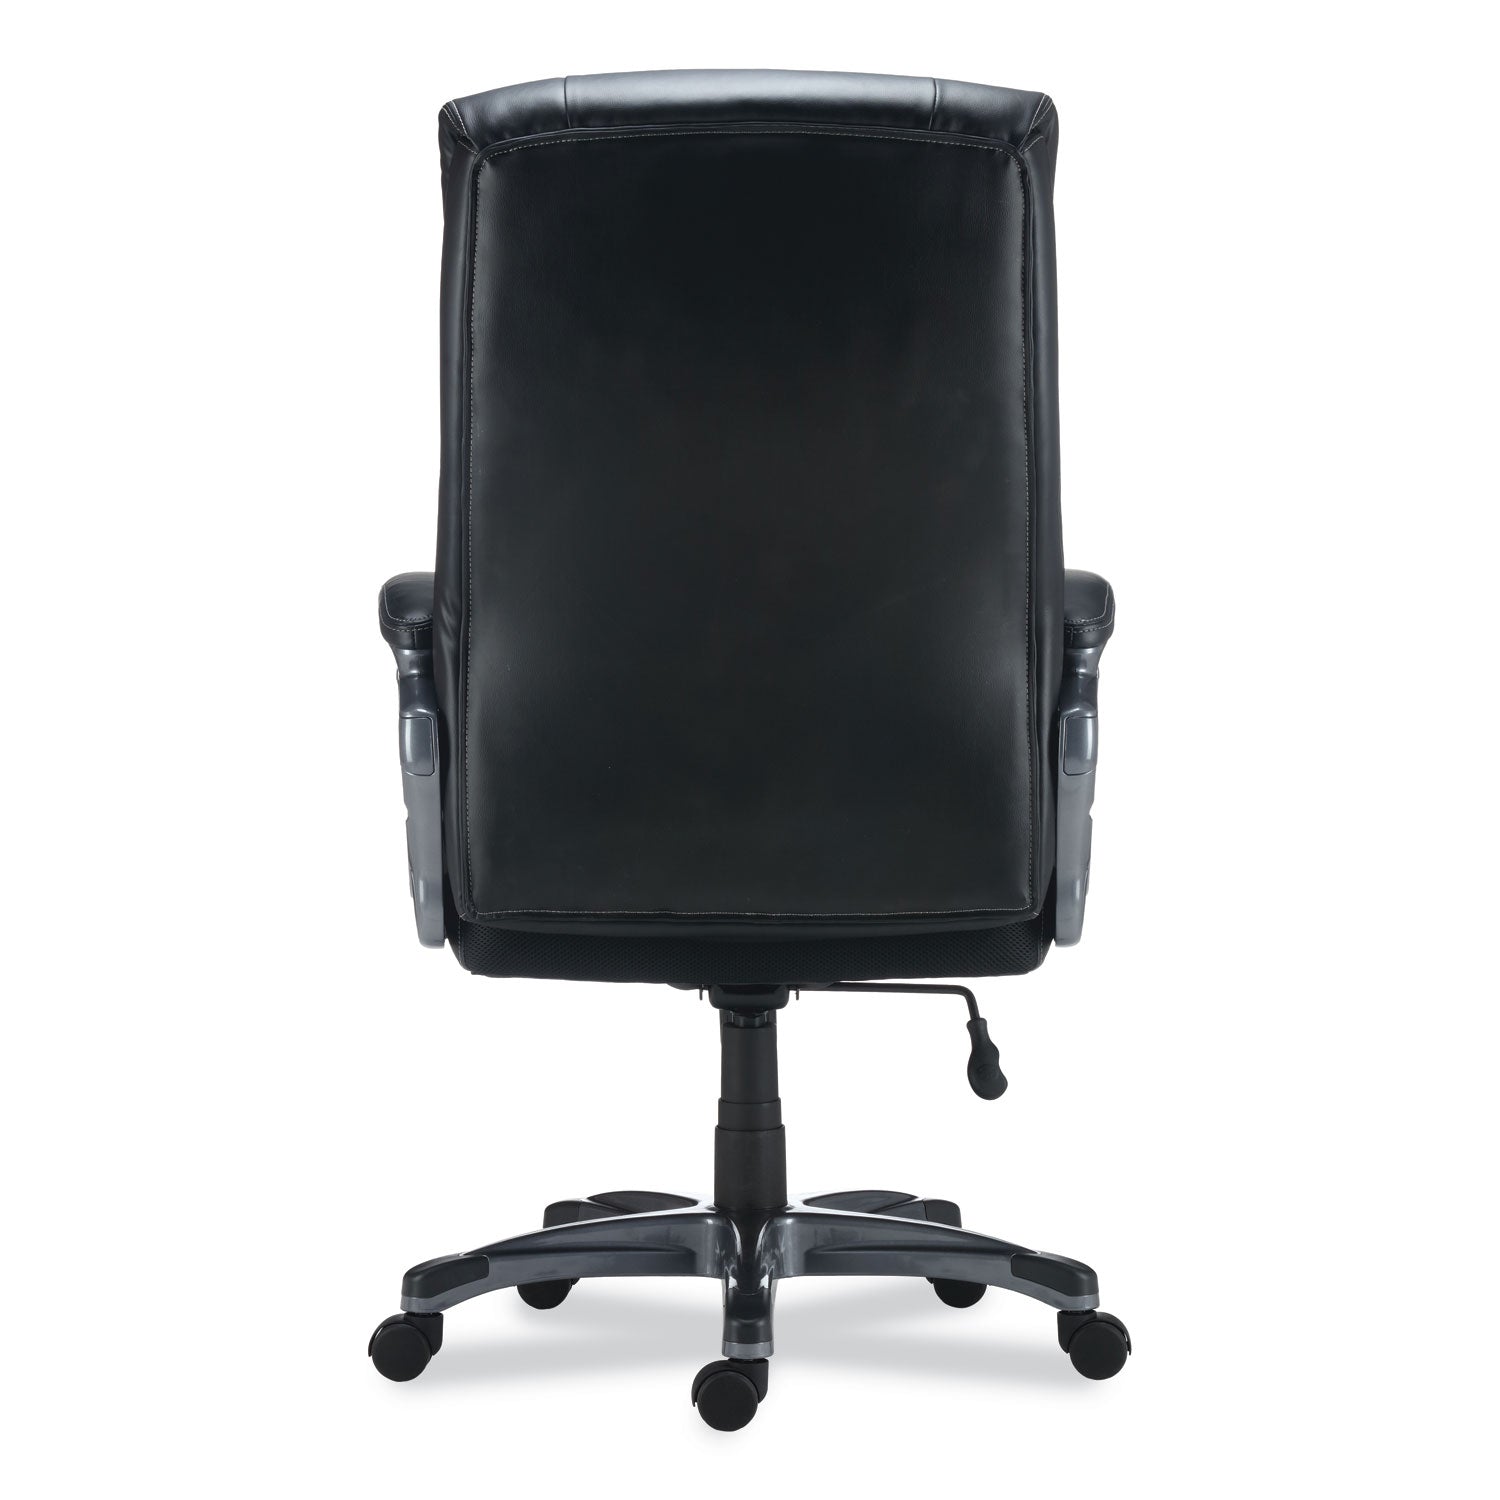 Alera Egino Big and Tall Chair, Supports Up to 400 lb, Black Seat/Back, Black Base - 5